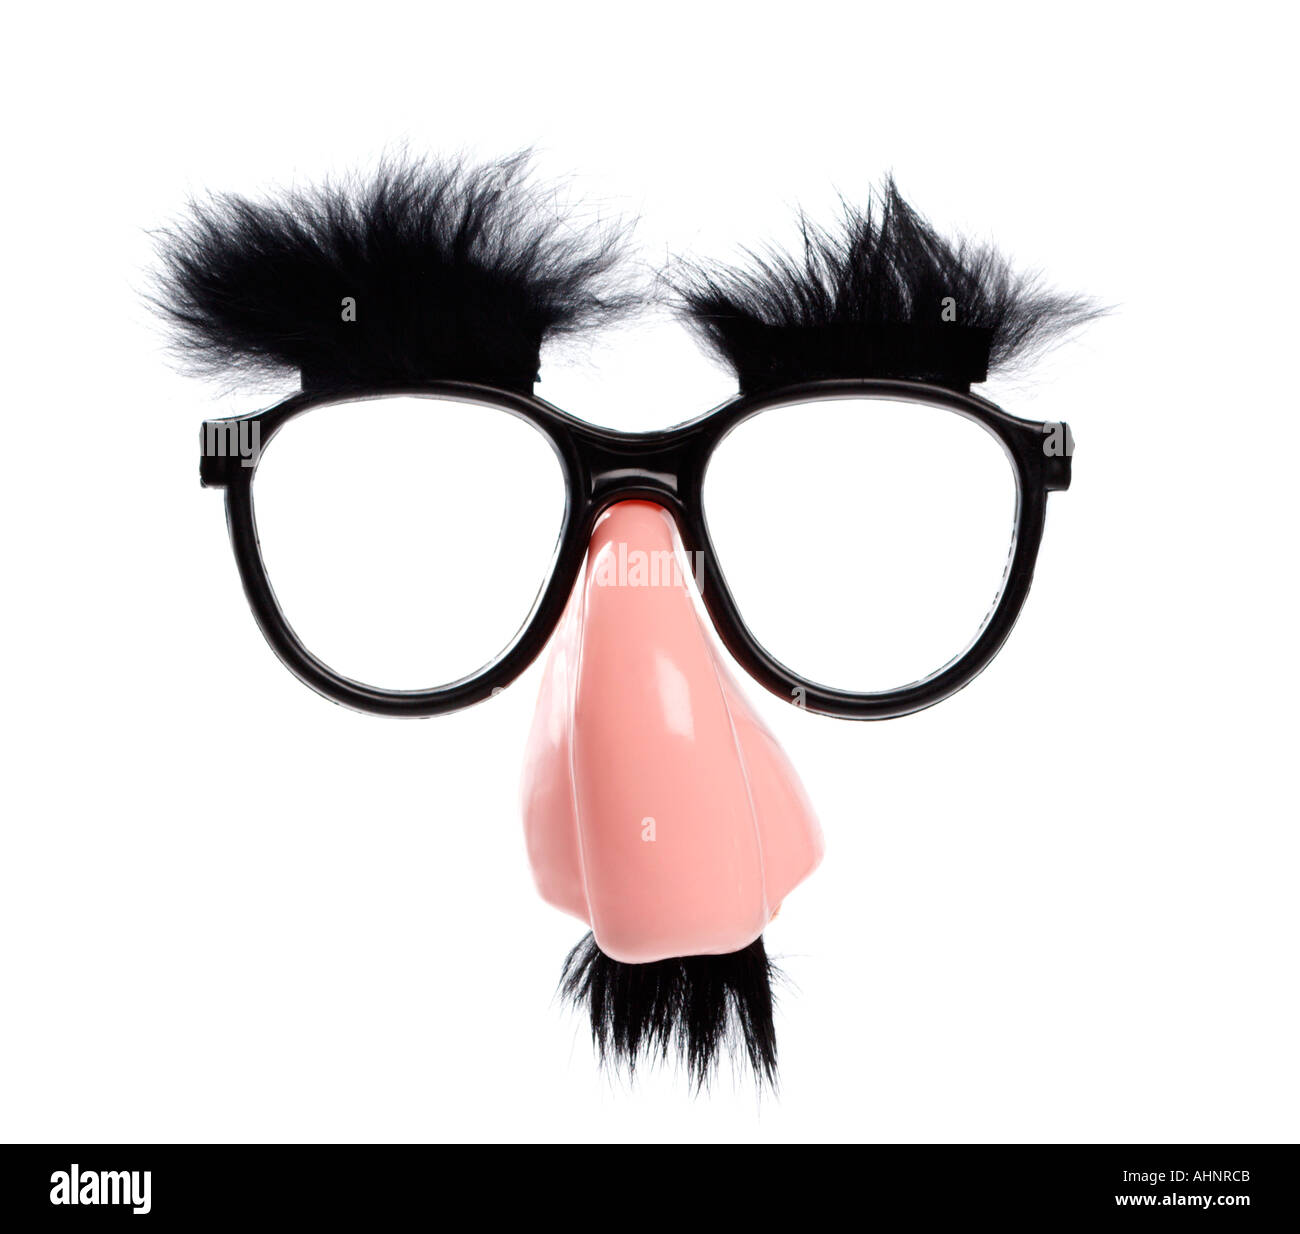 Groucho Marx glasses Stock Photo